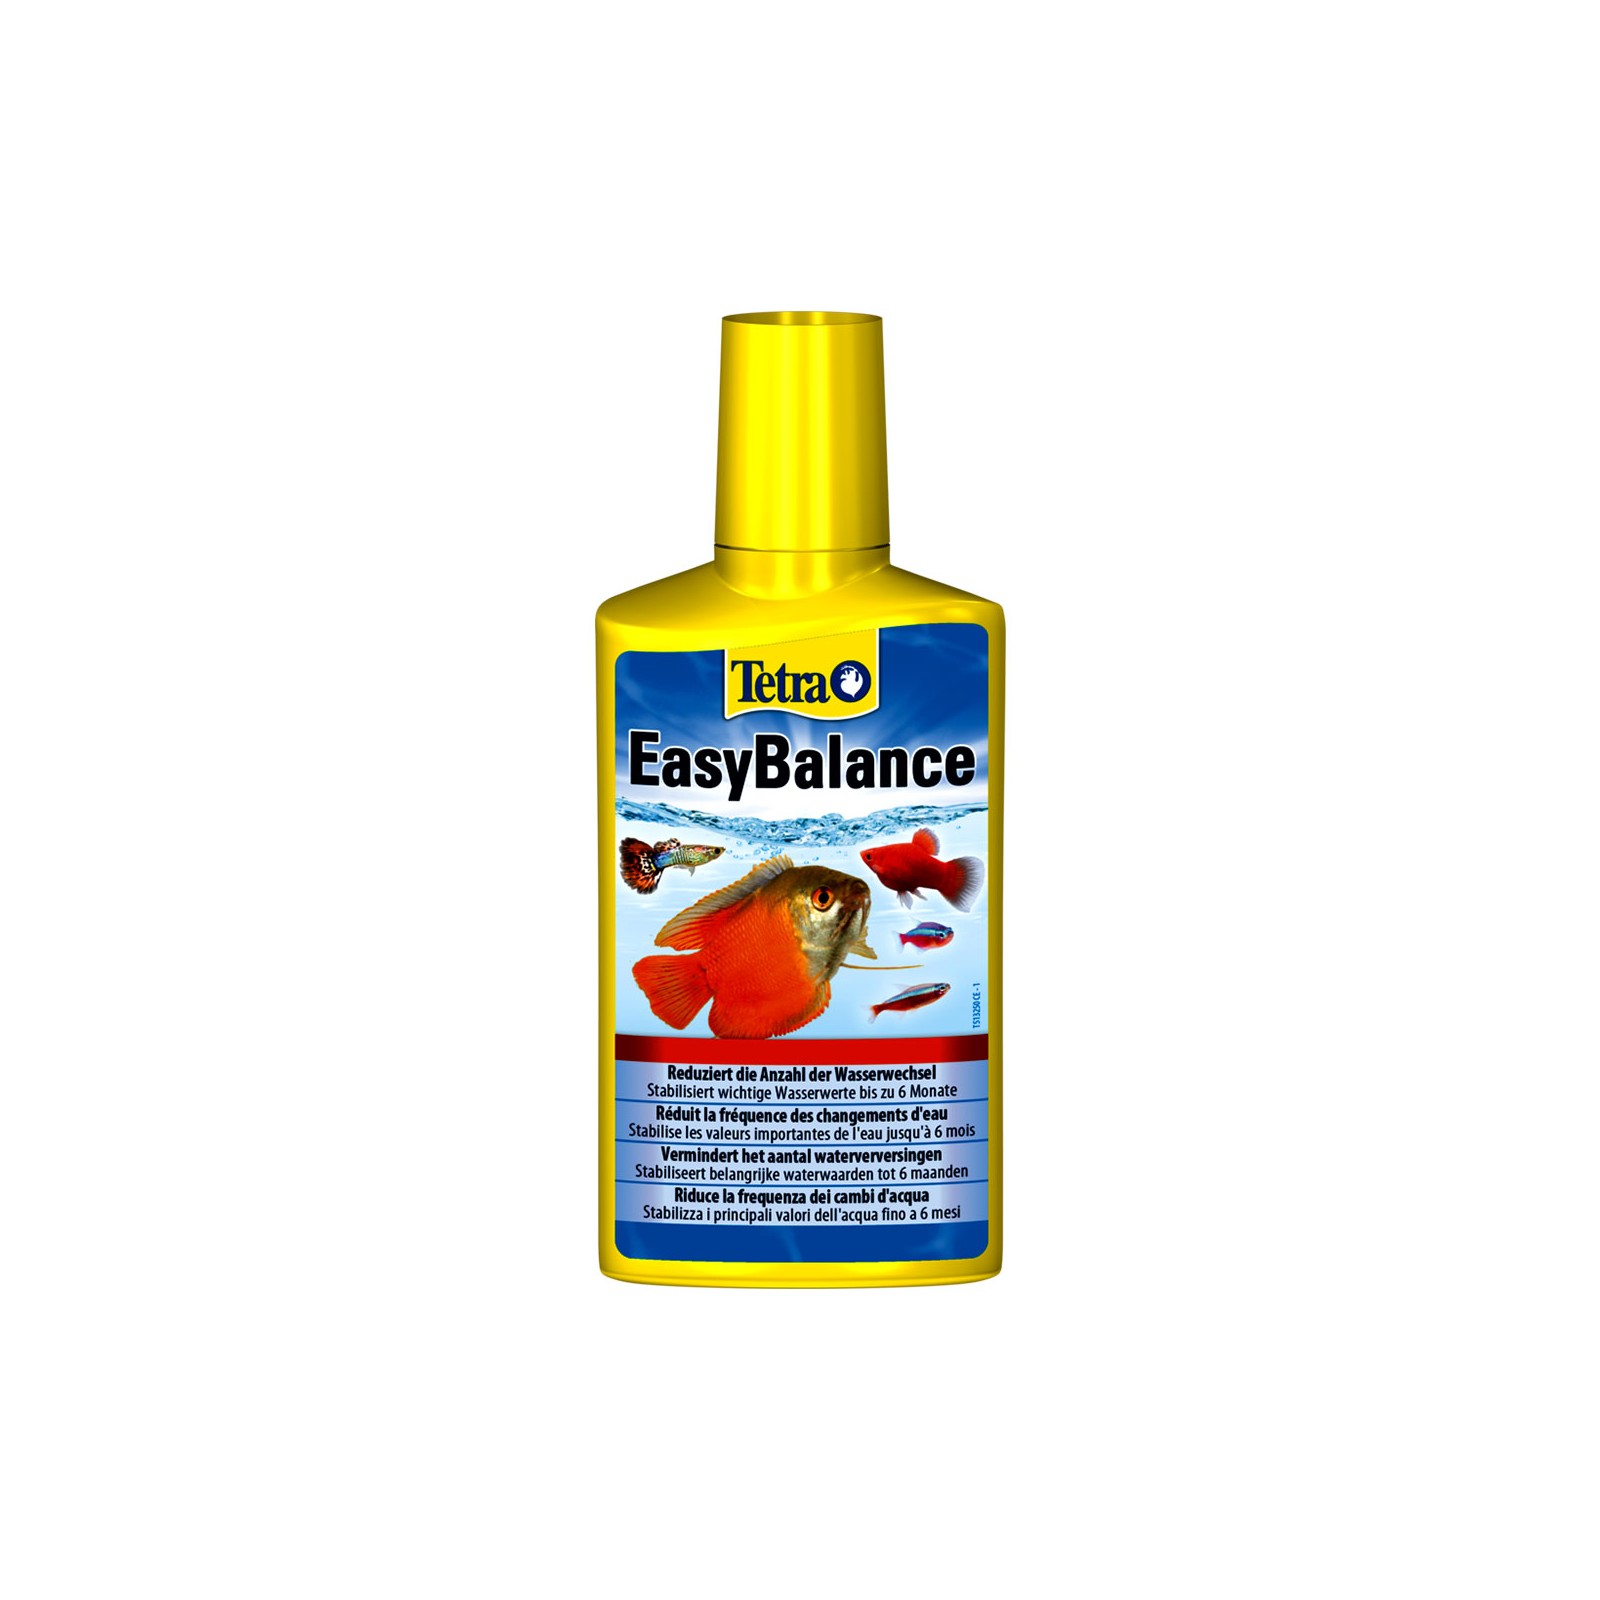 Tetra EasyBalance 250 ml Riduce la frequenza dei cambi d'acqua in acquario elimina i fosfati